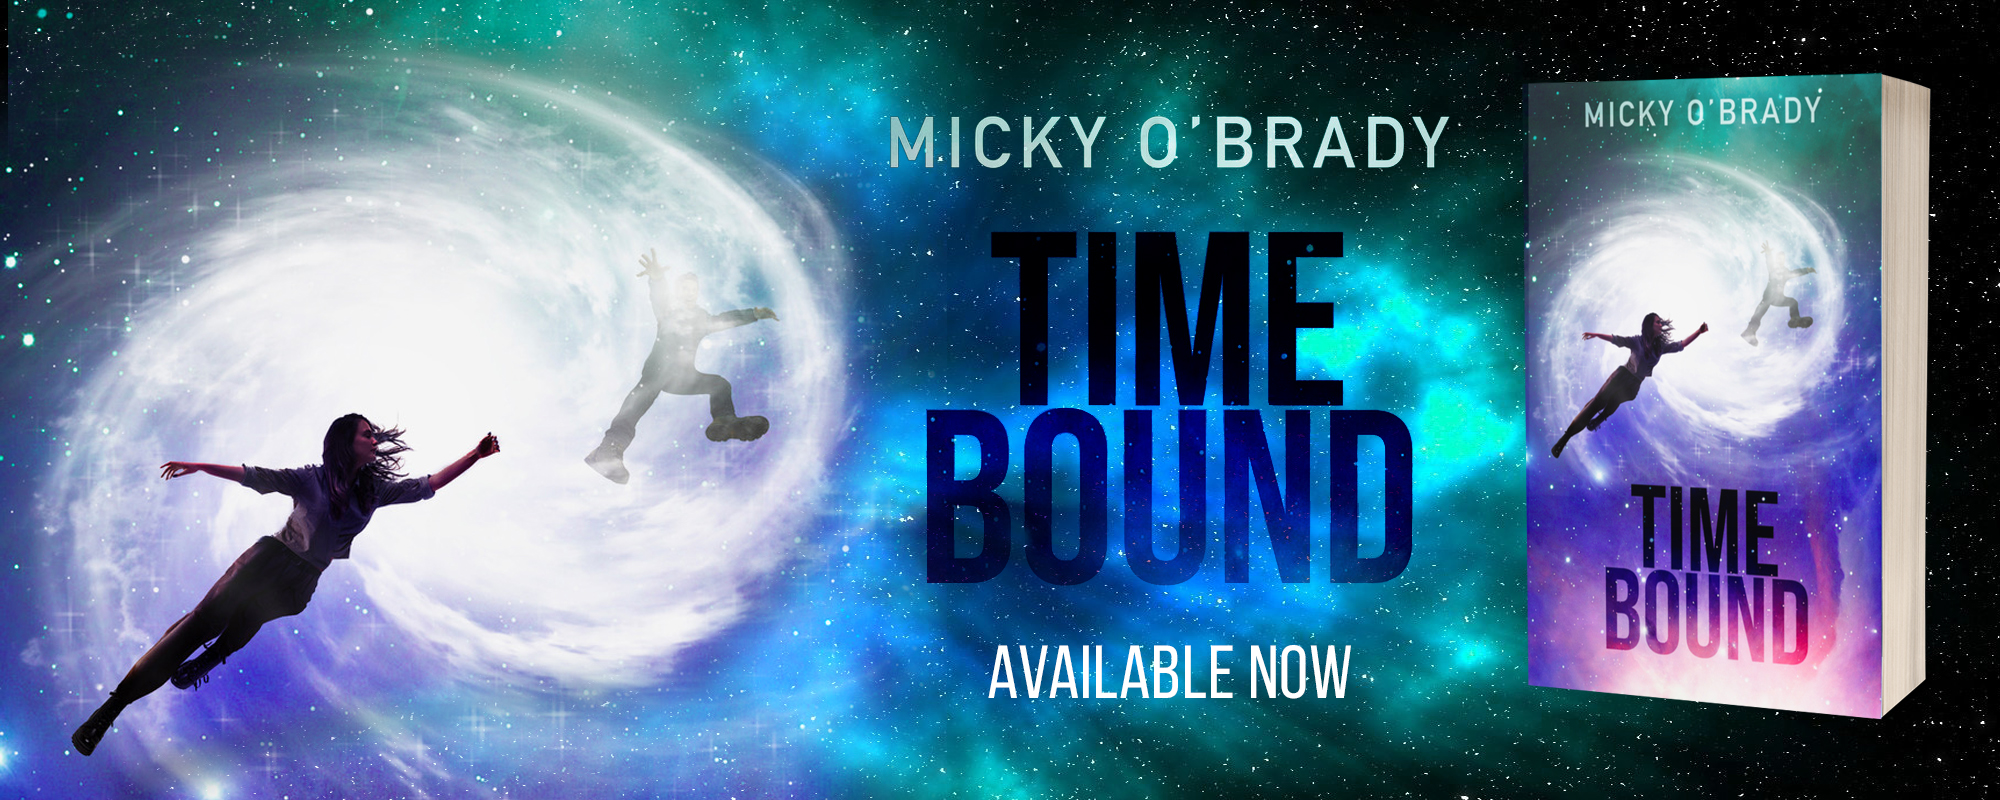 Time Bound by Micky O'Brady, available now